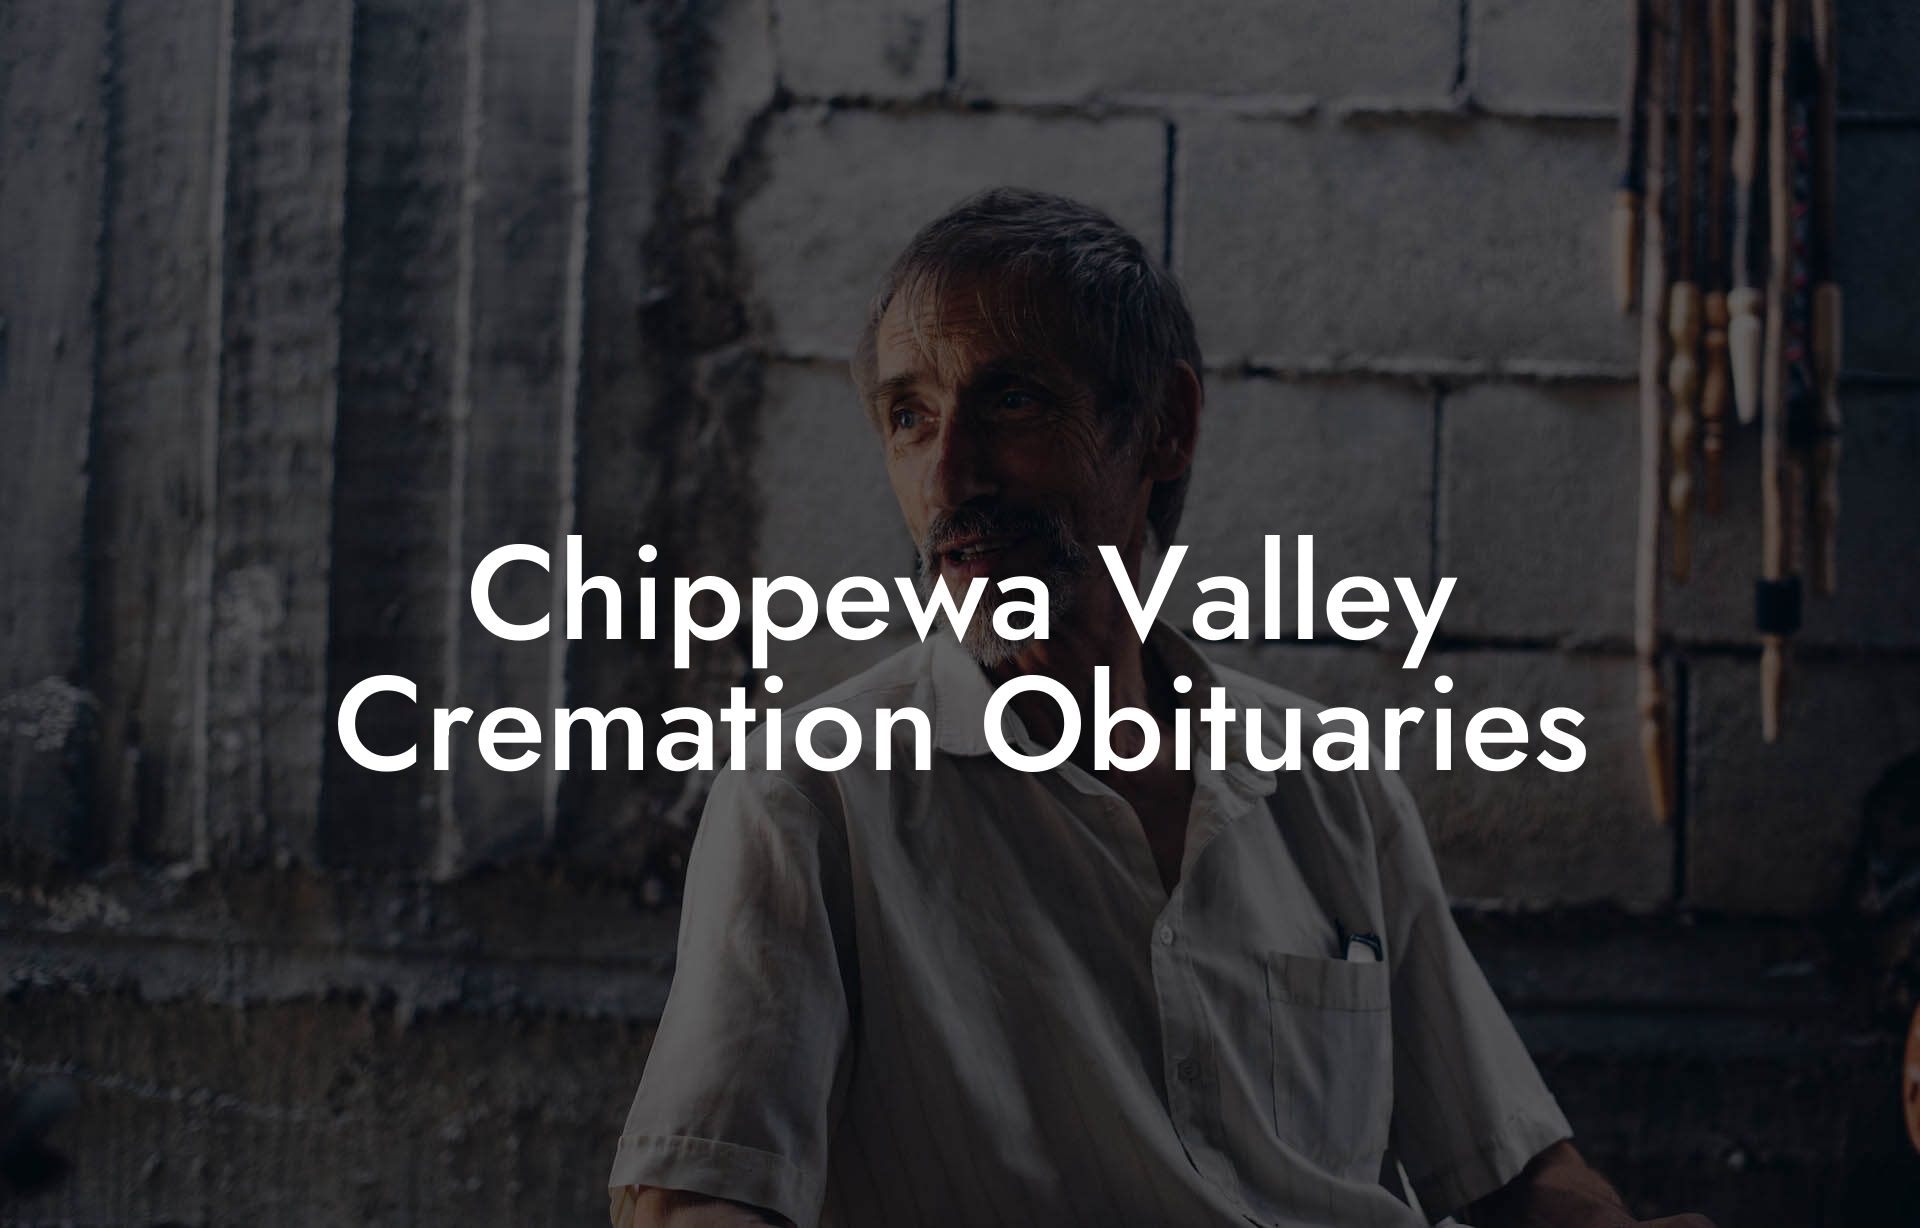 Chippewa Valley Cremation Obituaries